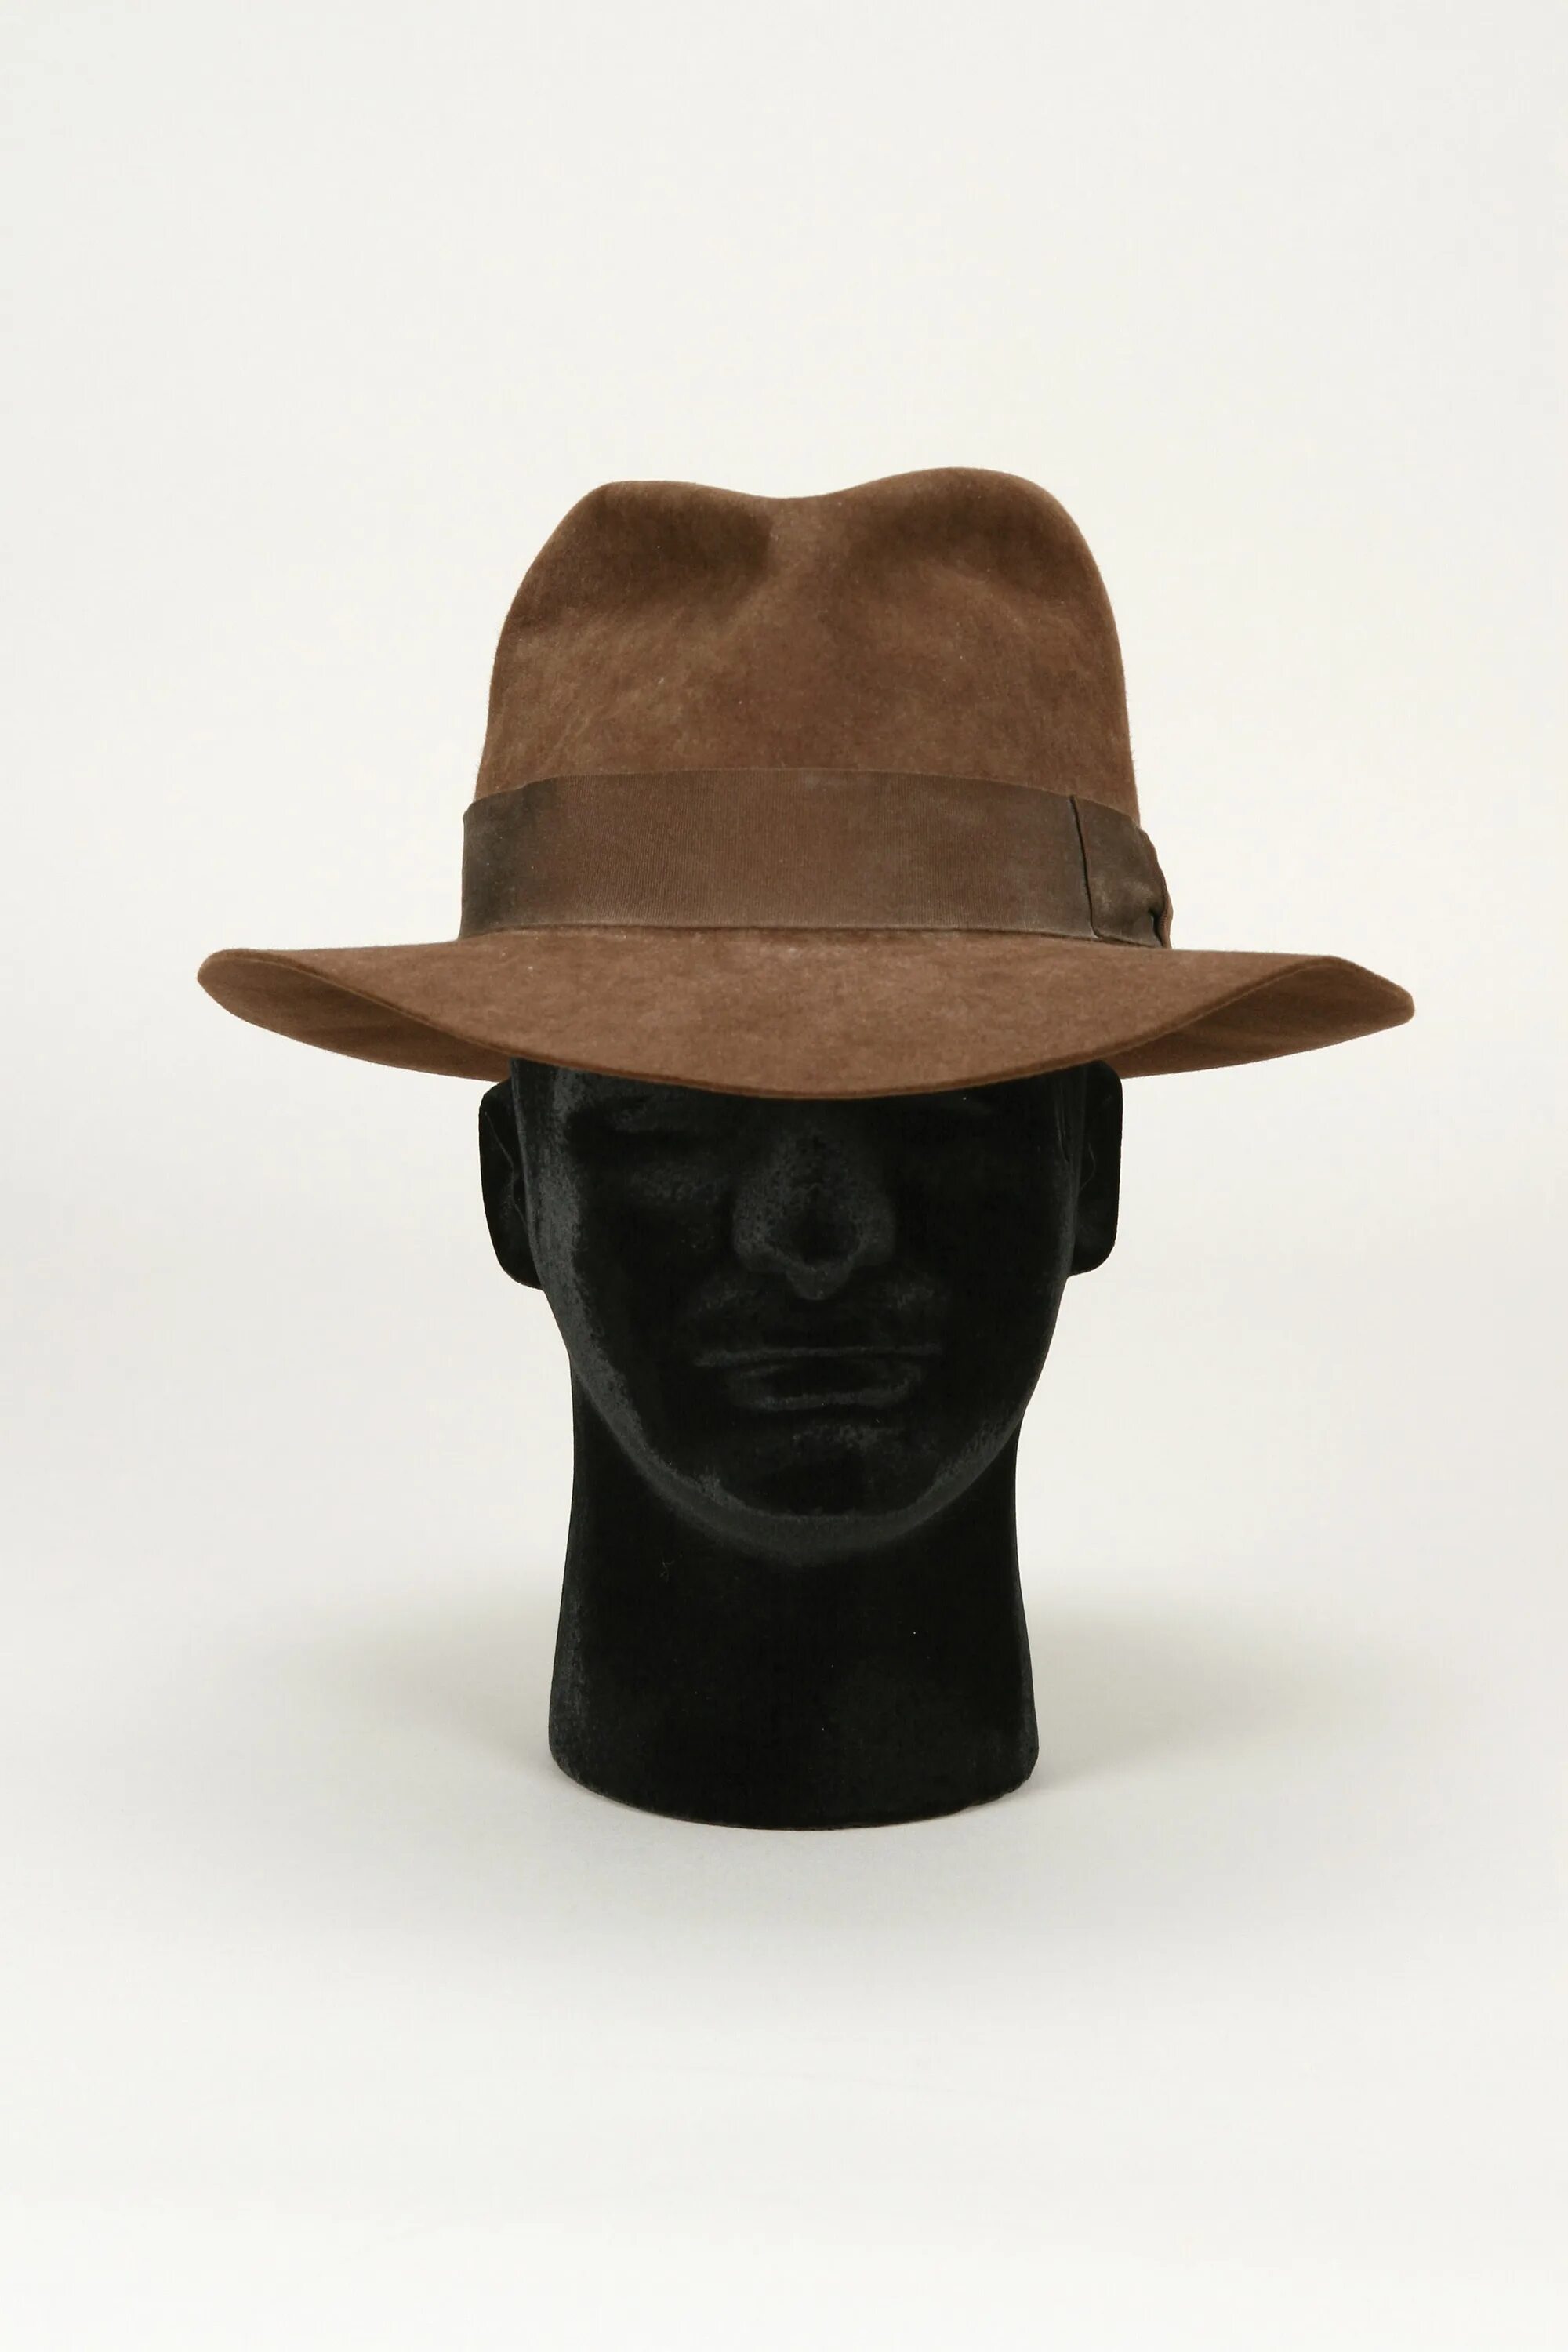 Шляпа Федора Индиана Джонс. Шляпа мужская Fedora Indiana Jones. Индиана Джонс шляпа Стетсон. Шляпа Борсалино Индиана Джонс. Шляпа индианы